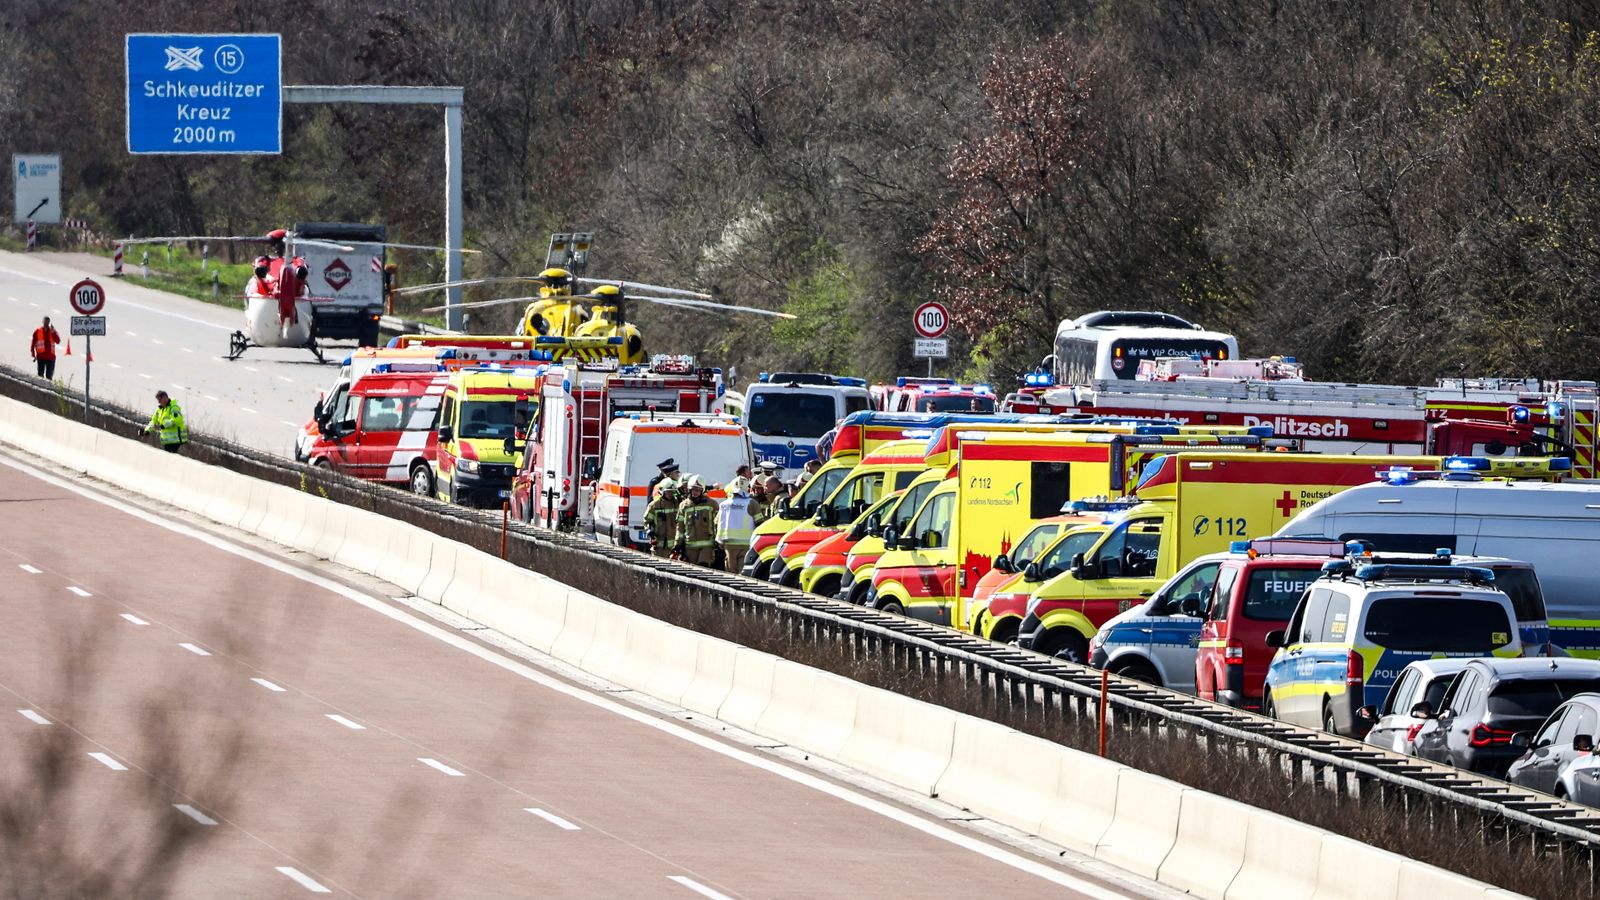 Almeno cinque persone sono morte in un incidente d'autobus su un'autostrada in Germania  notizie dal mondo